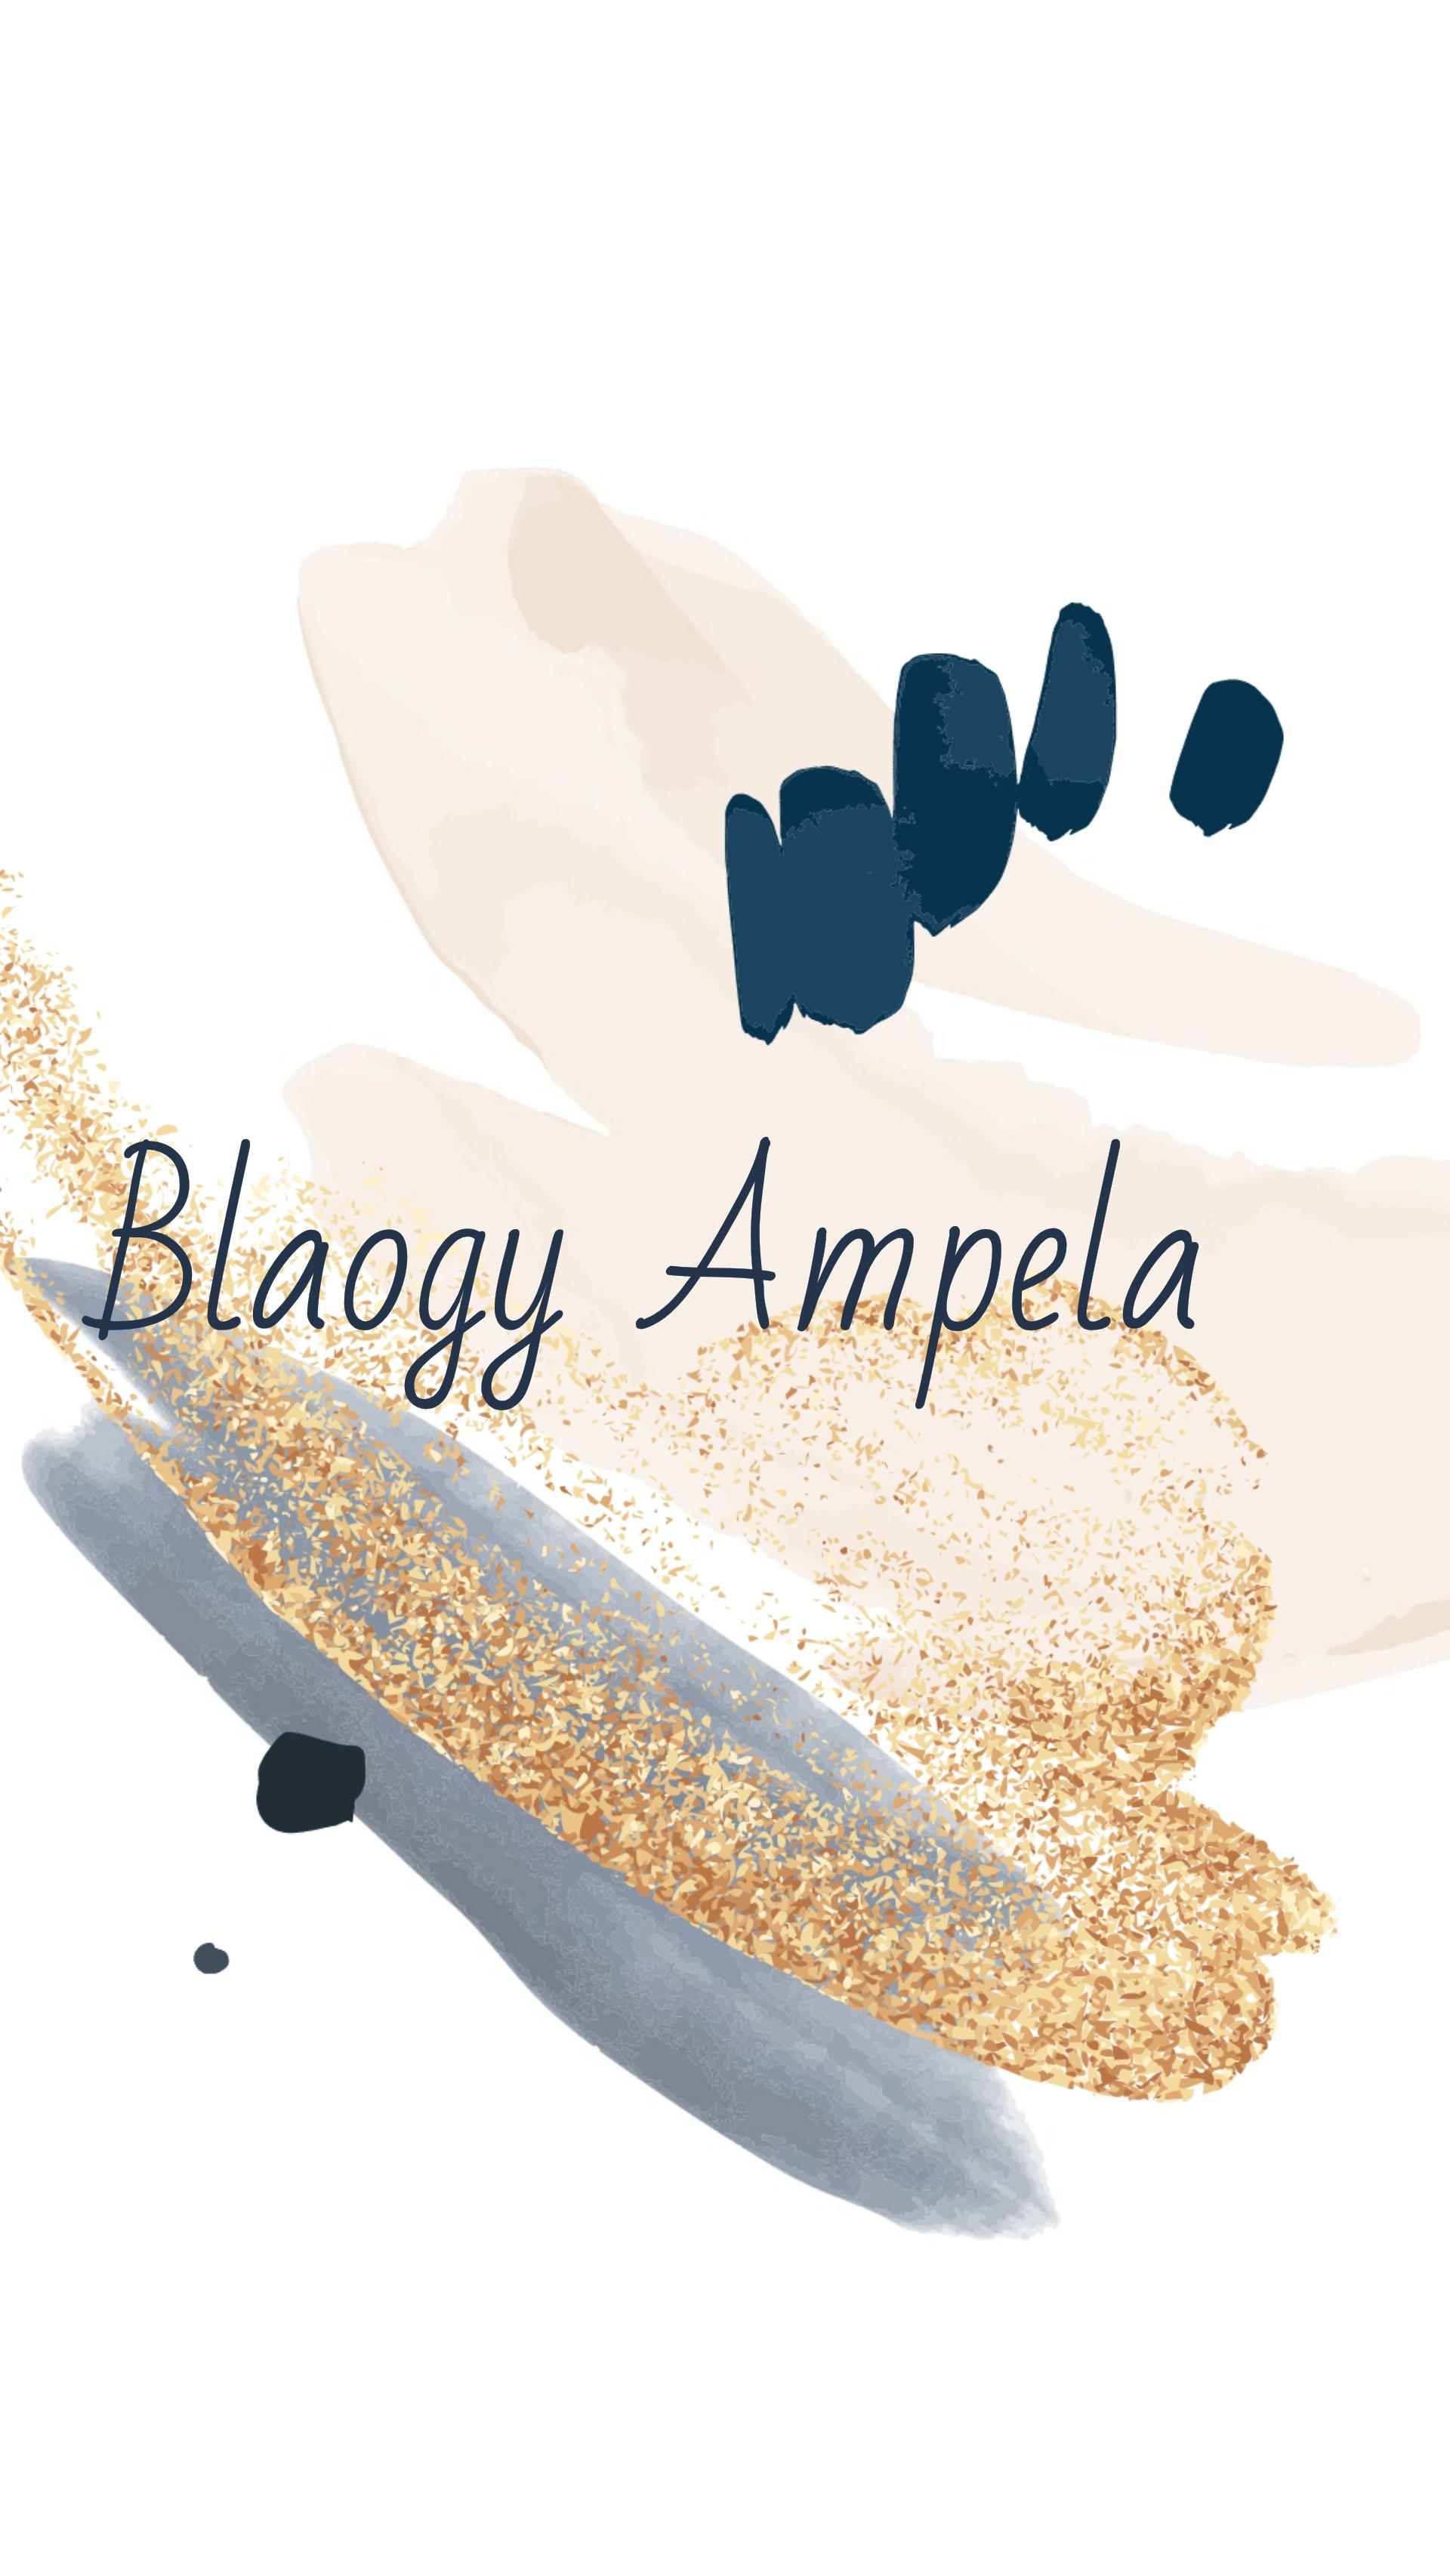 Blaogy Ampela 